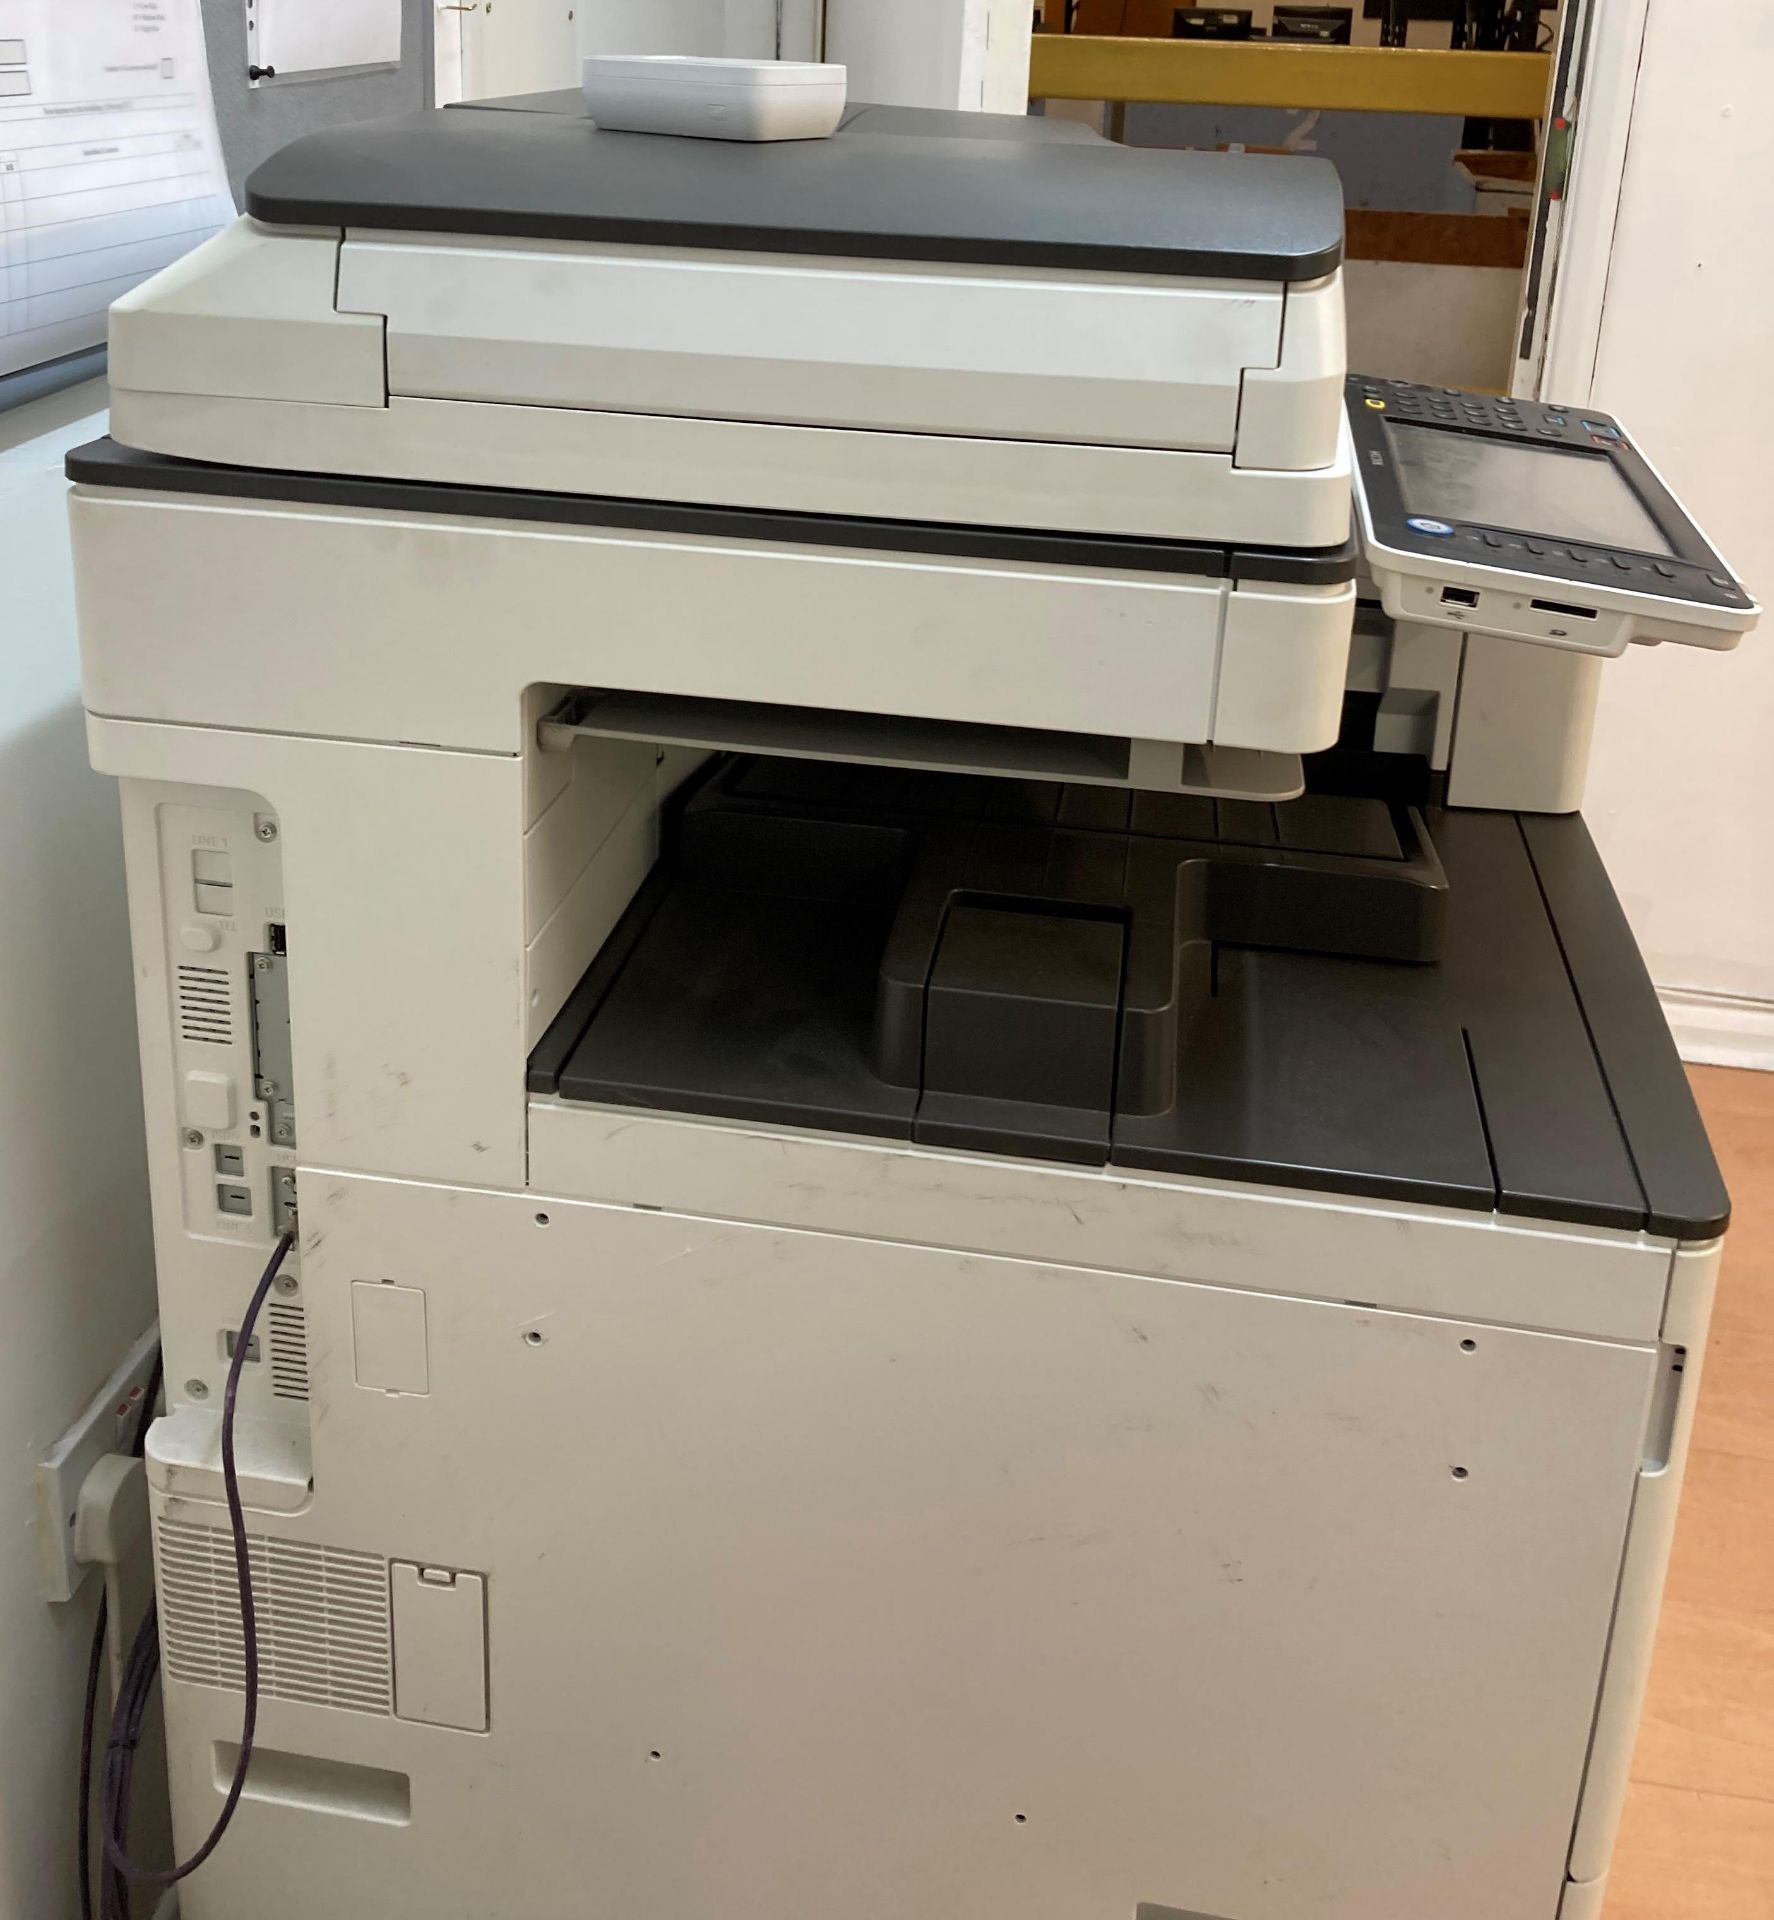 Ricoh MP C3003 copy print scan photocopier (collection address: Unit 6A, Church Street, Mexborough, - Image 2 of 3